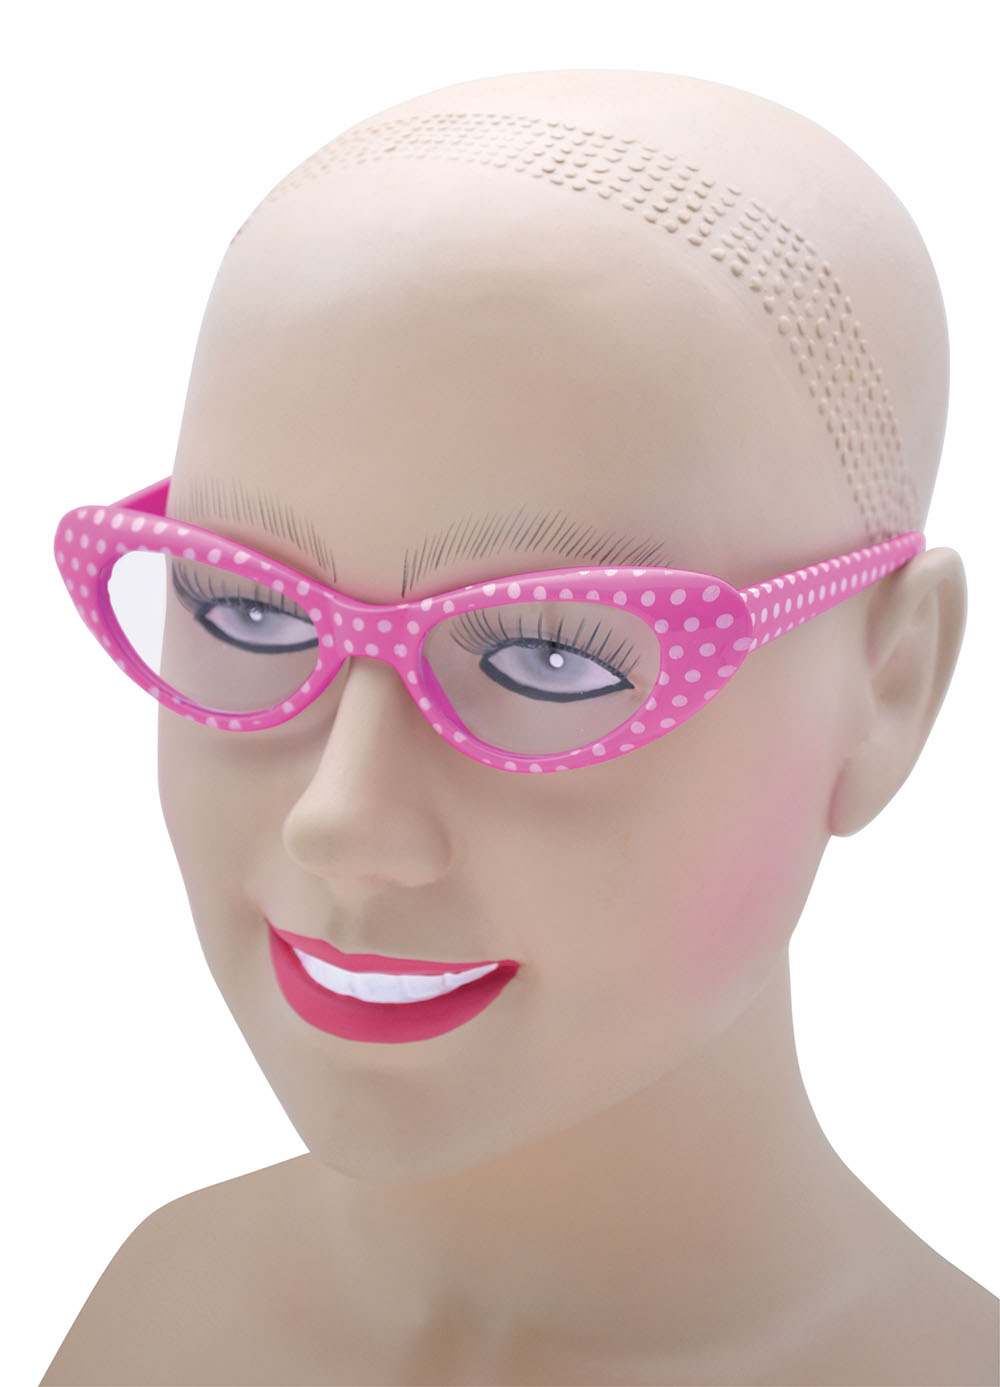 Rock 'n' Roll Glasses. Pink/White